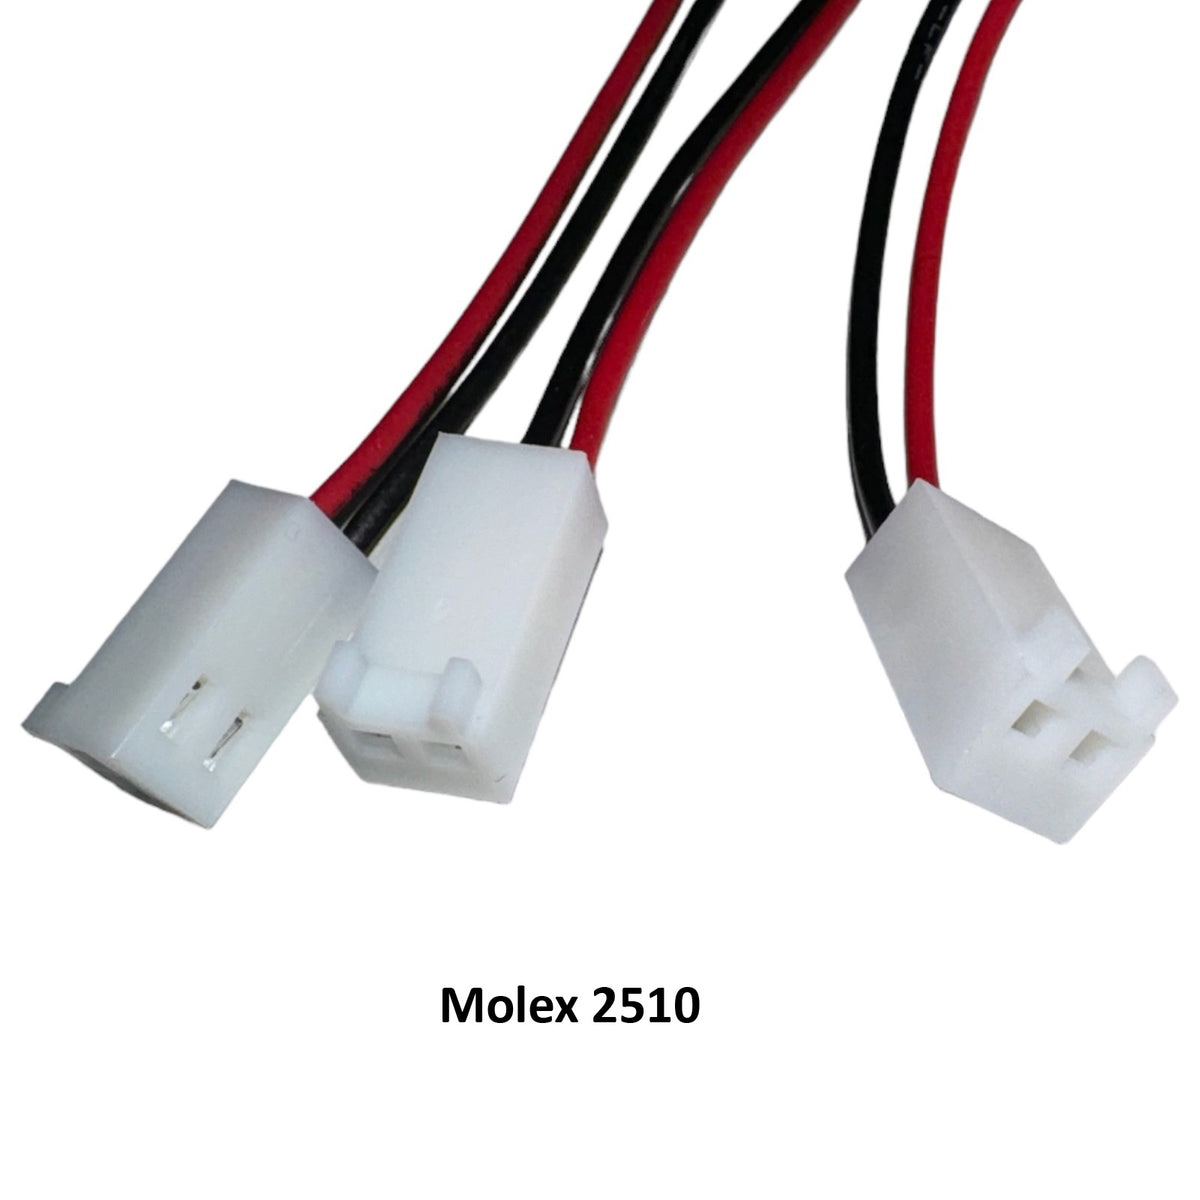 1S 3.7V 3400mAh Li-ion battery with Molex 2510 2pin connector